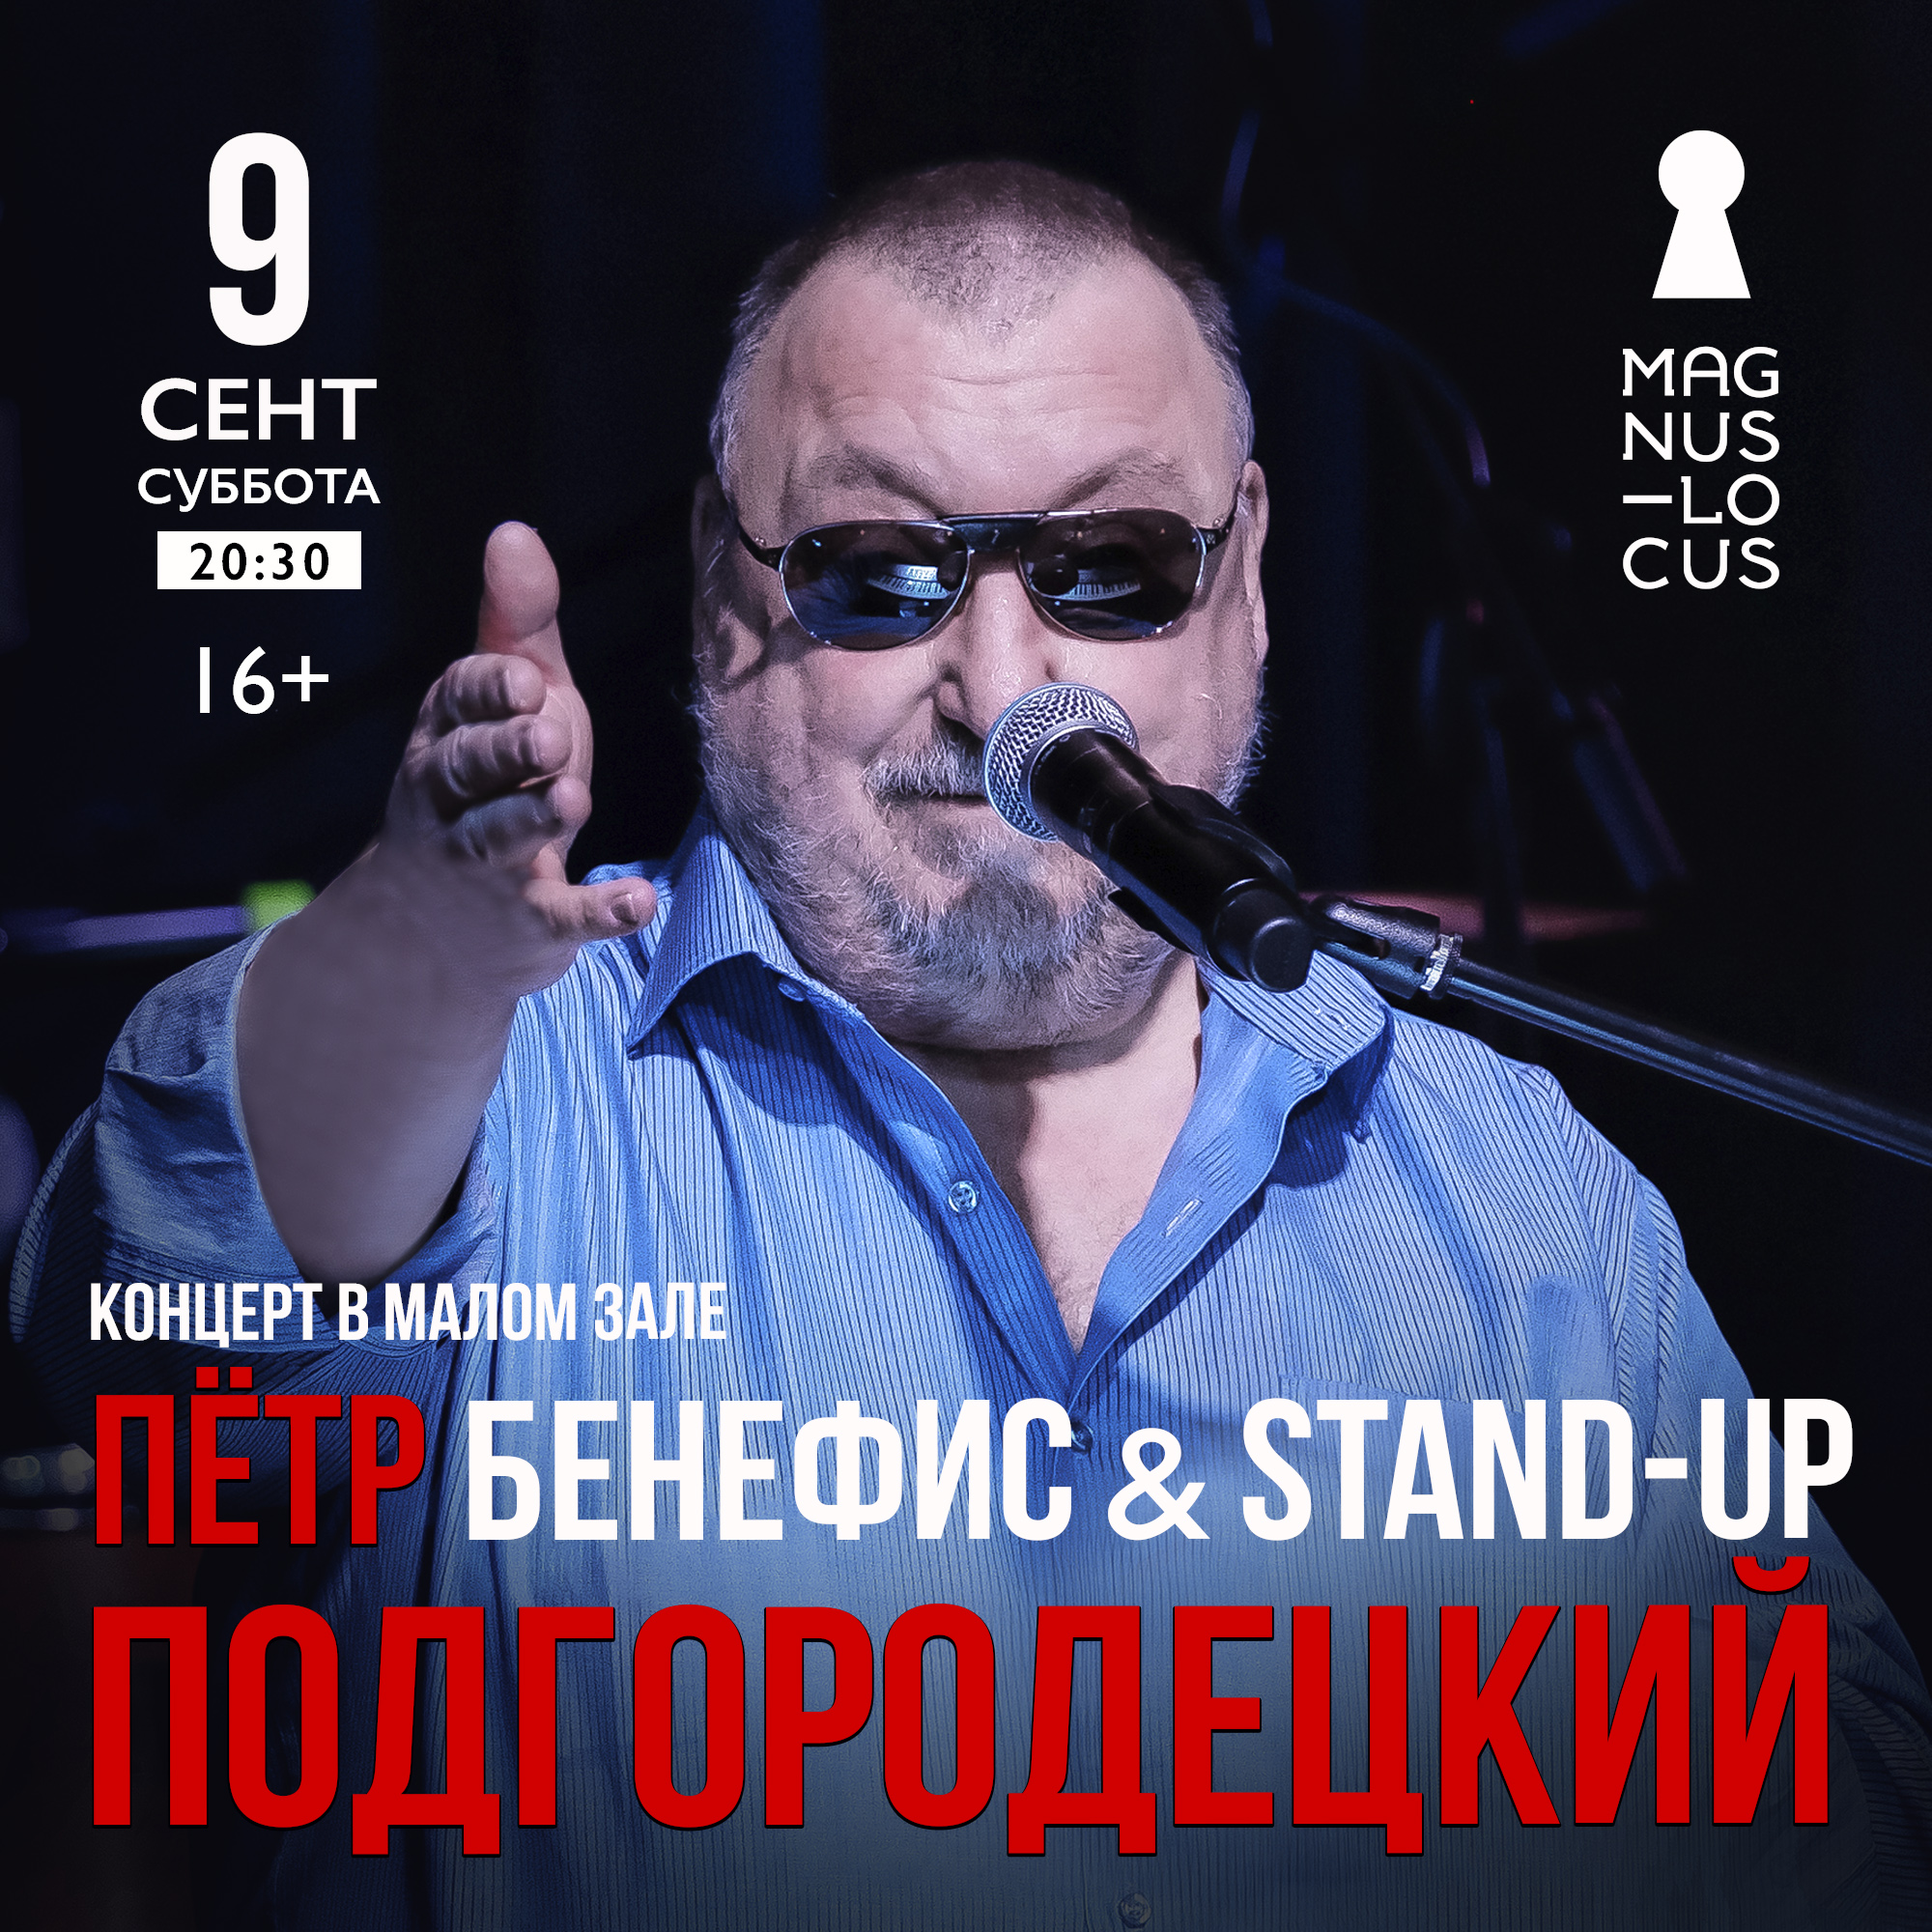 Пётр Подгородецкий Бенефис & Stand-Up